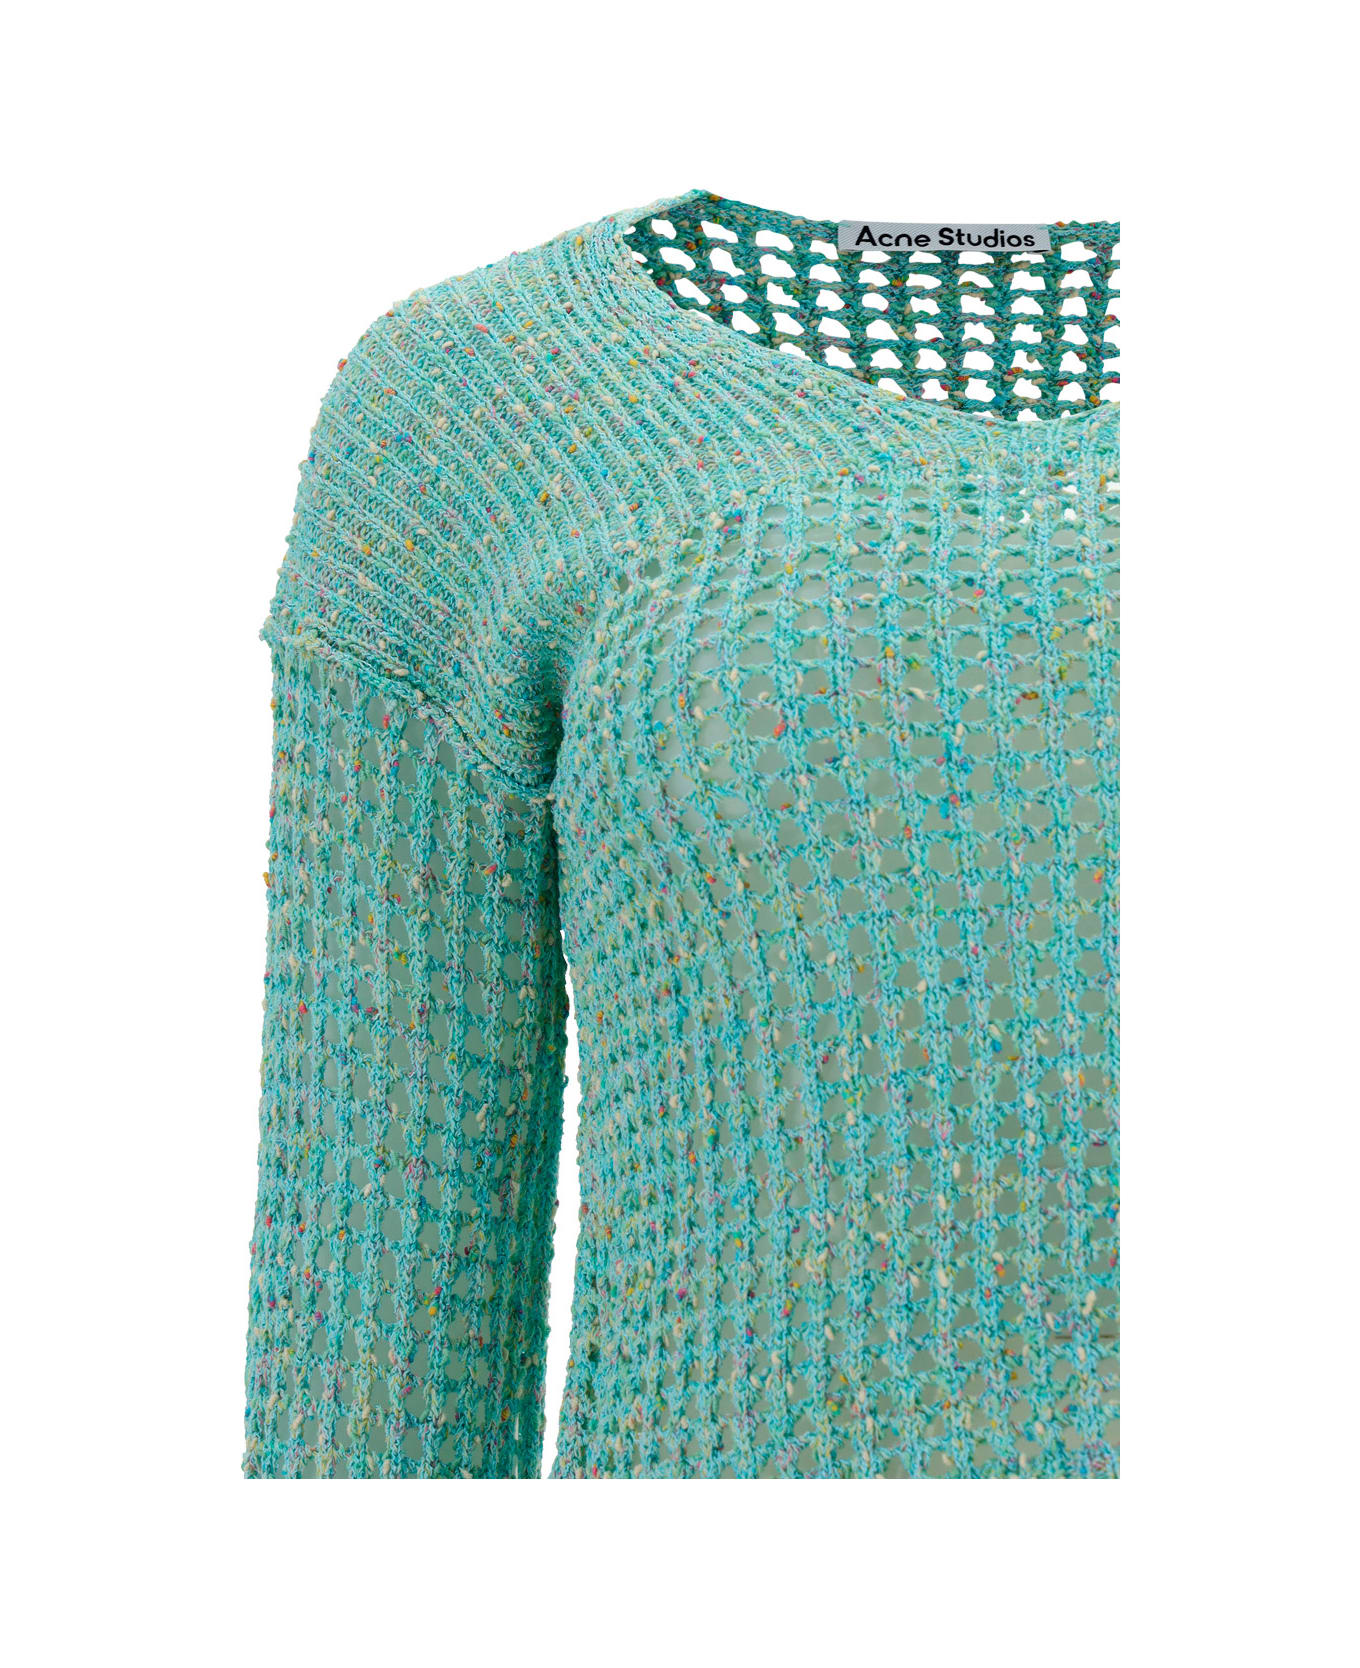 Acne Studios Sweater - Aqua Blue